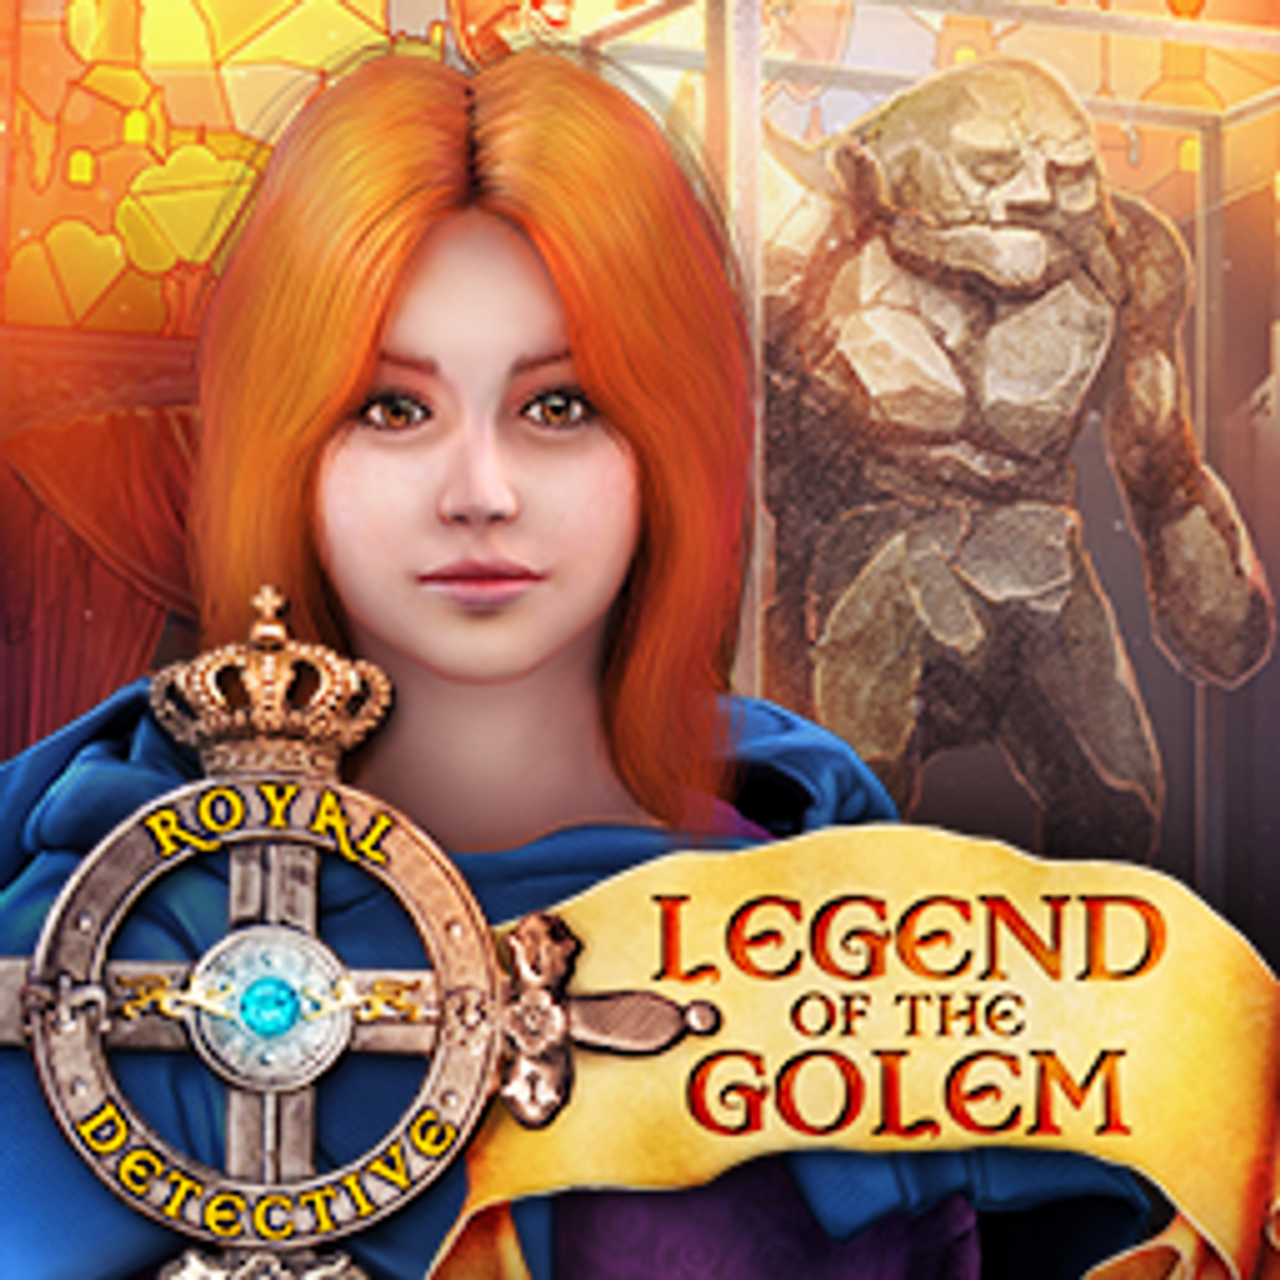 Royal Detective: Legend Of The Golem